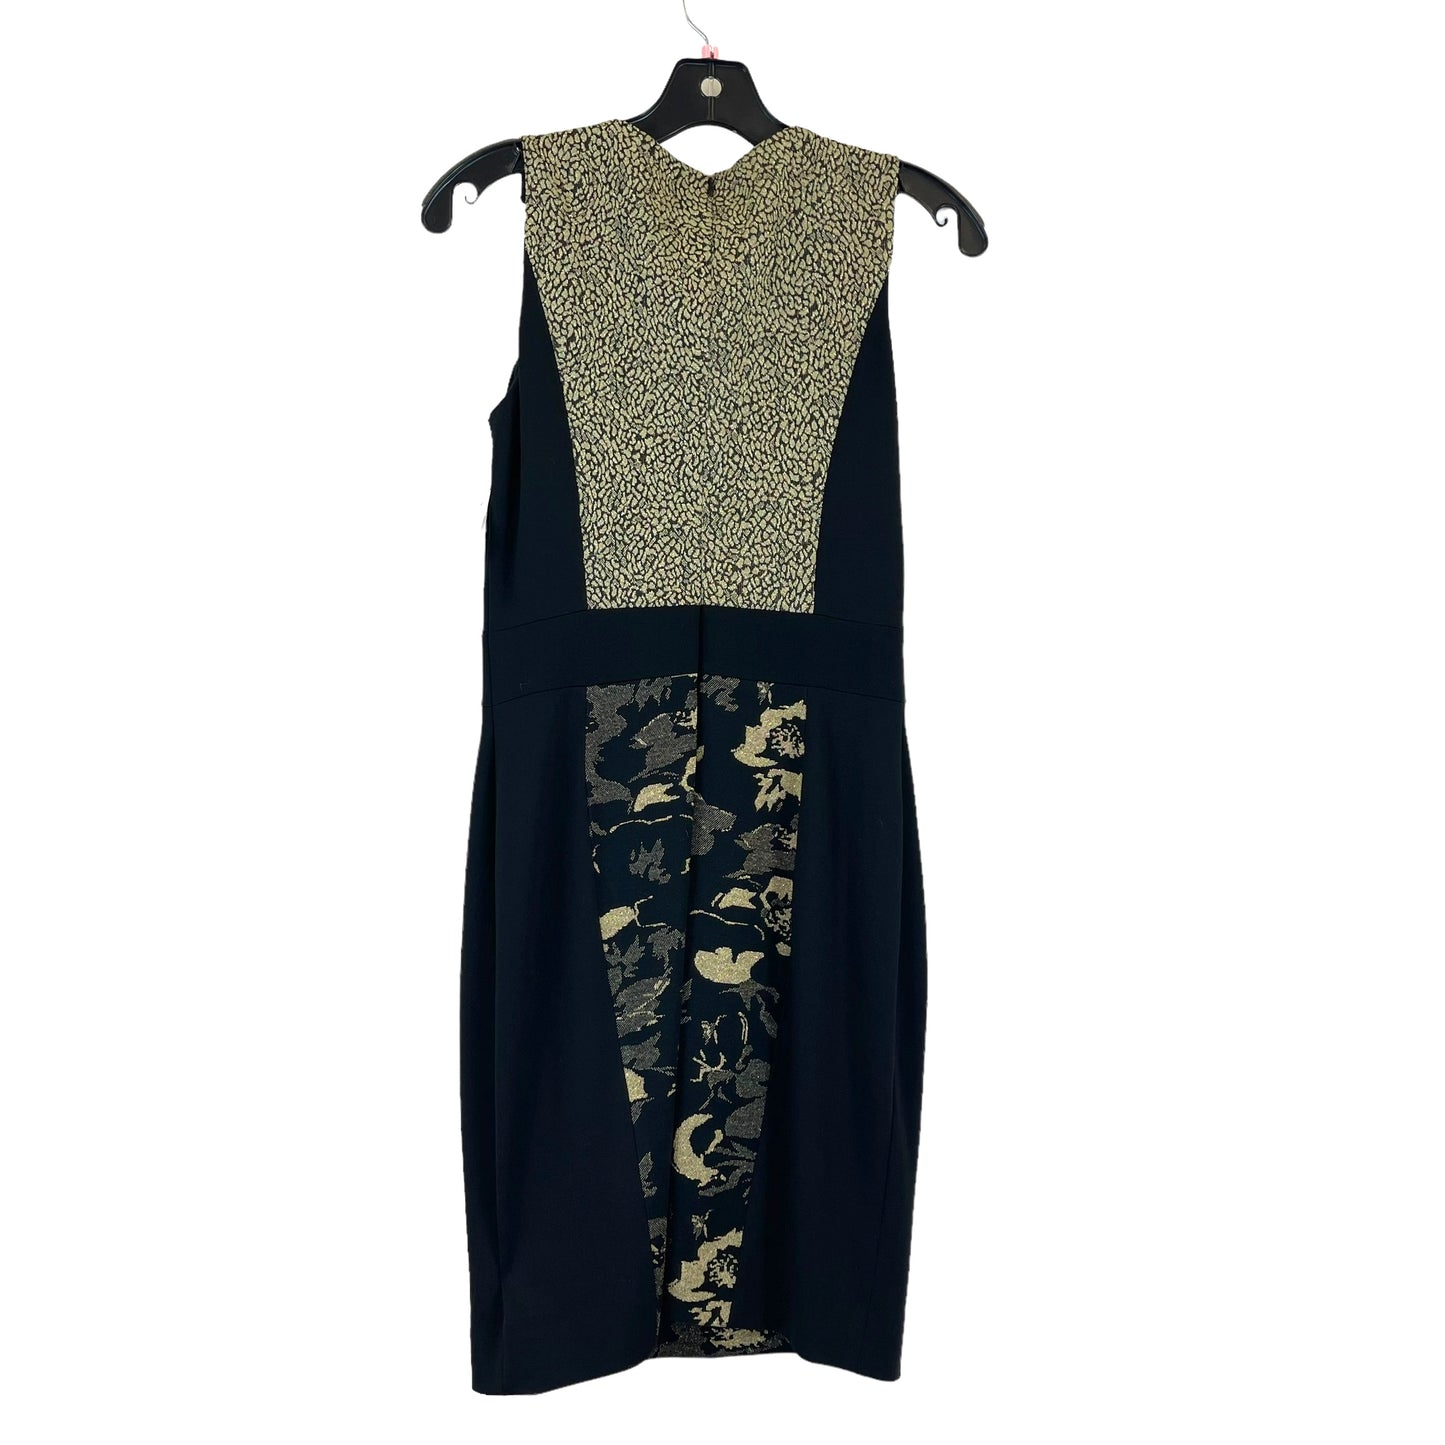 Dress Casual Short By Badgley Mischka  Size: Xs